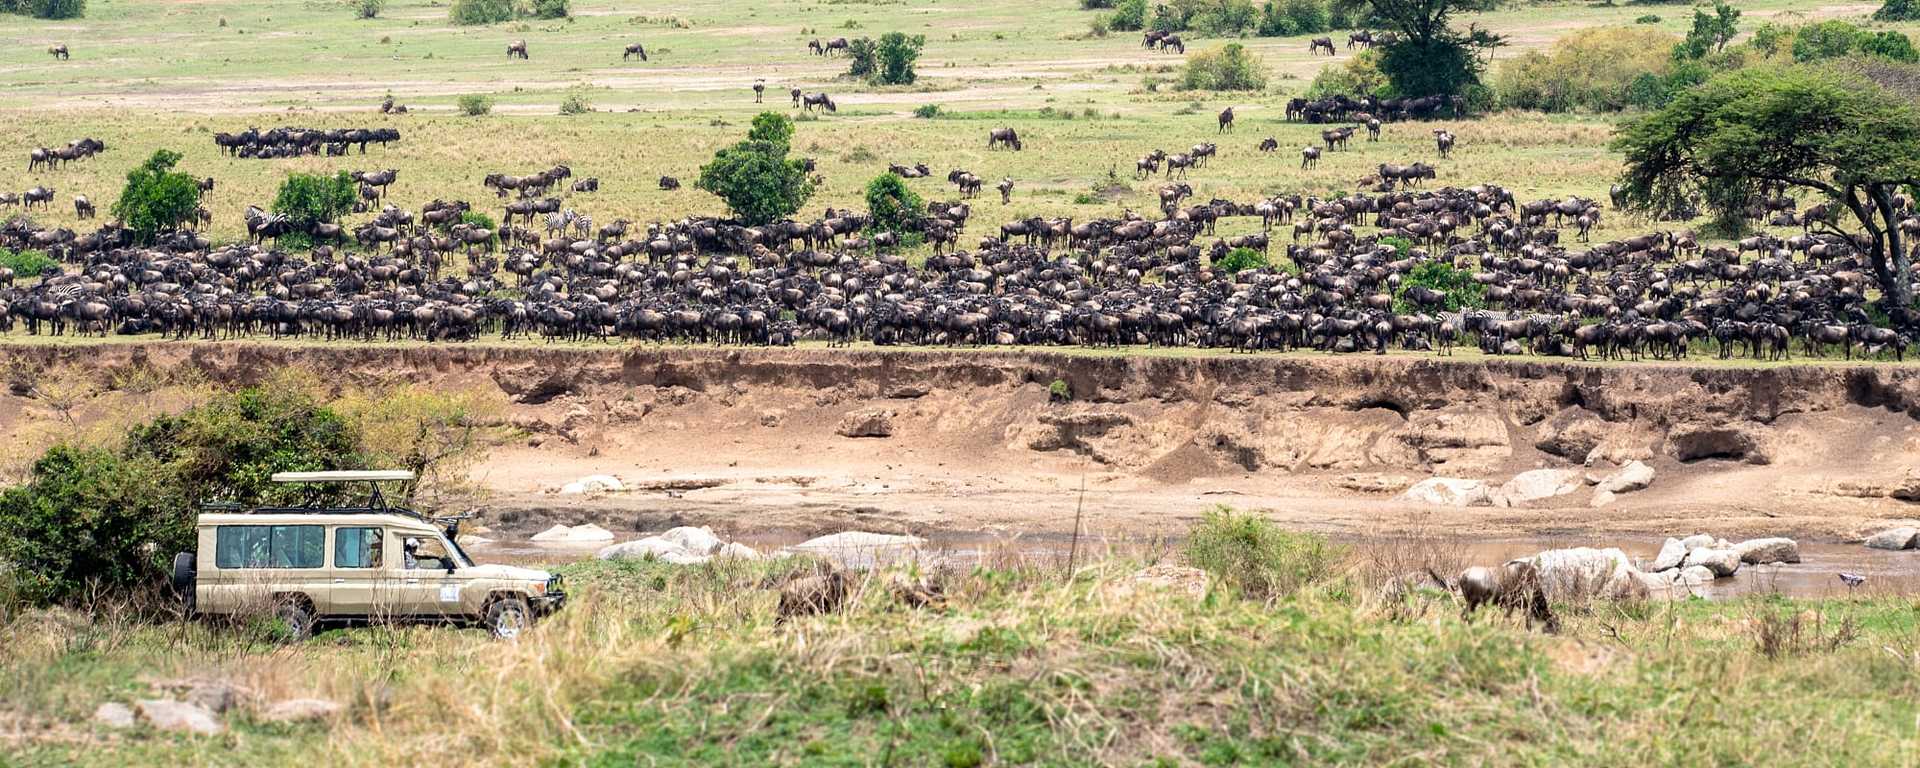 Great migration view in Northern Serengeti, Tanzania